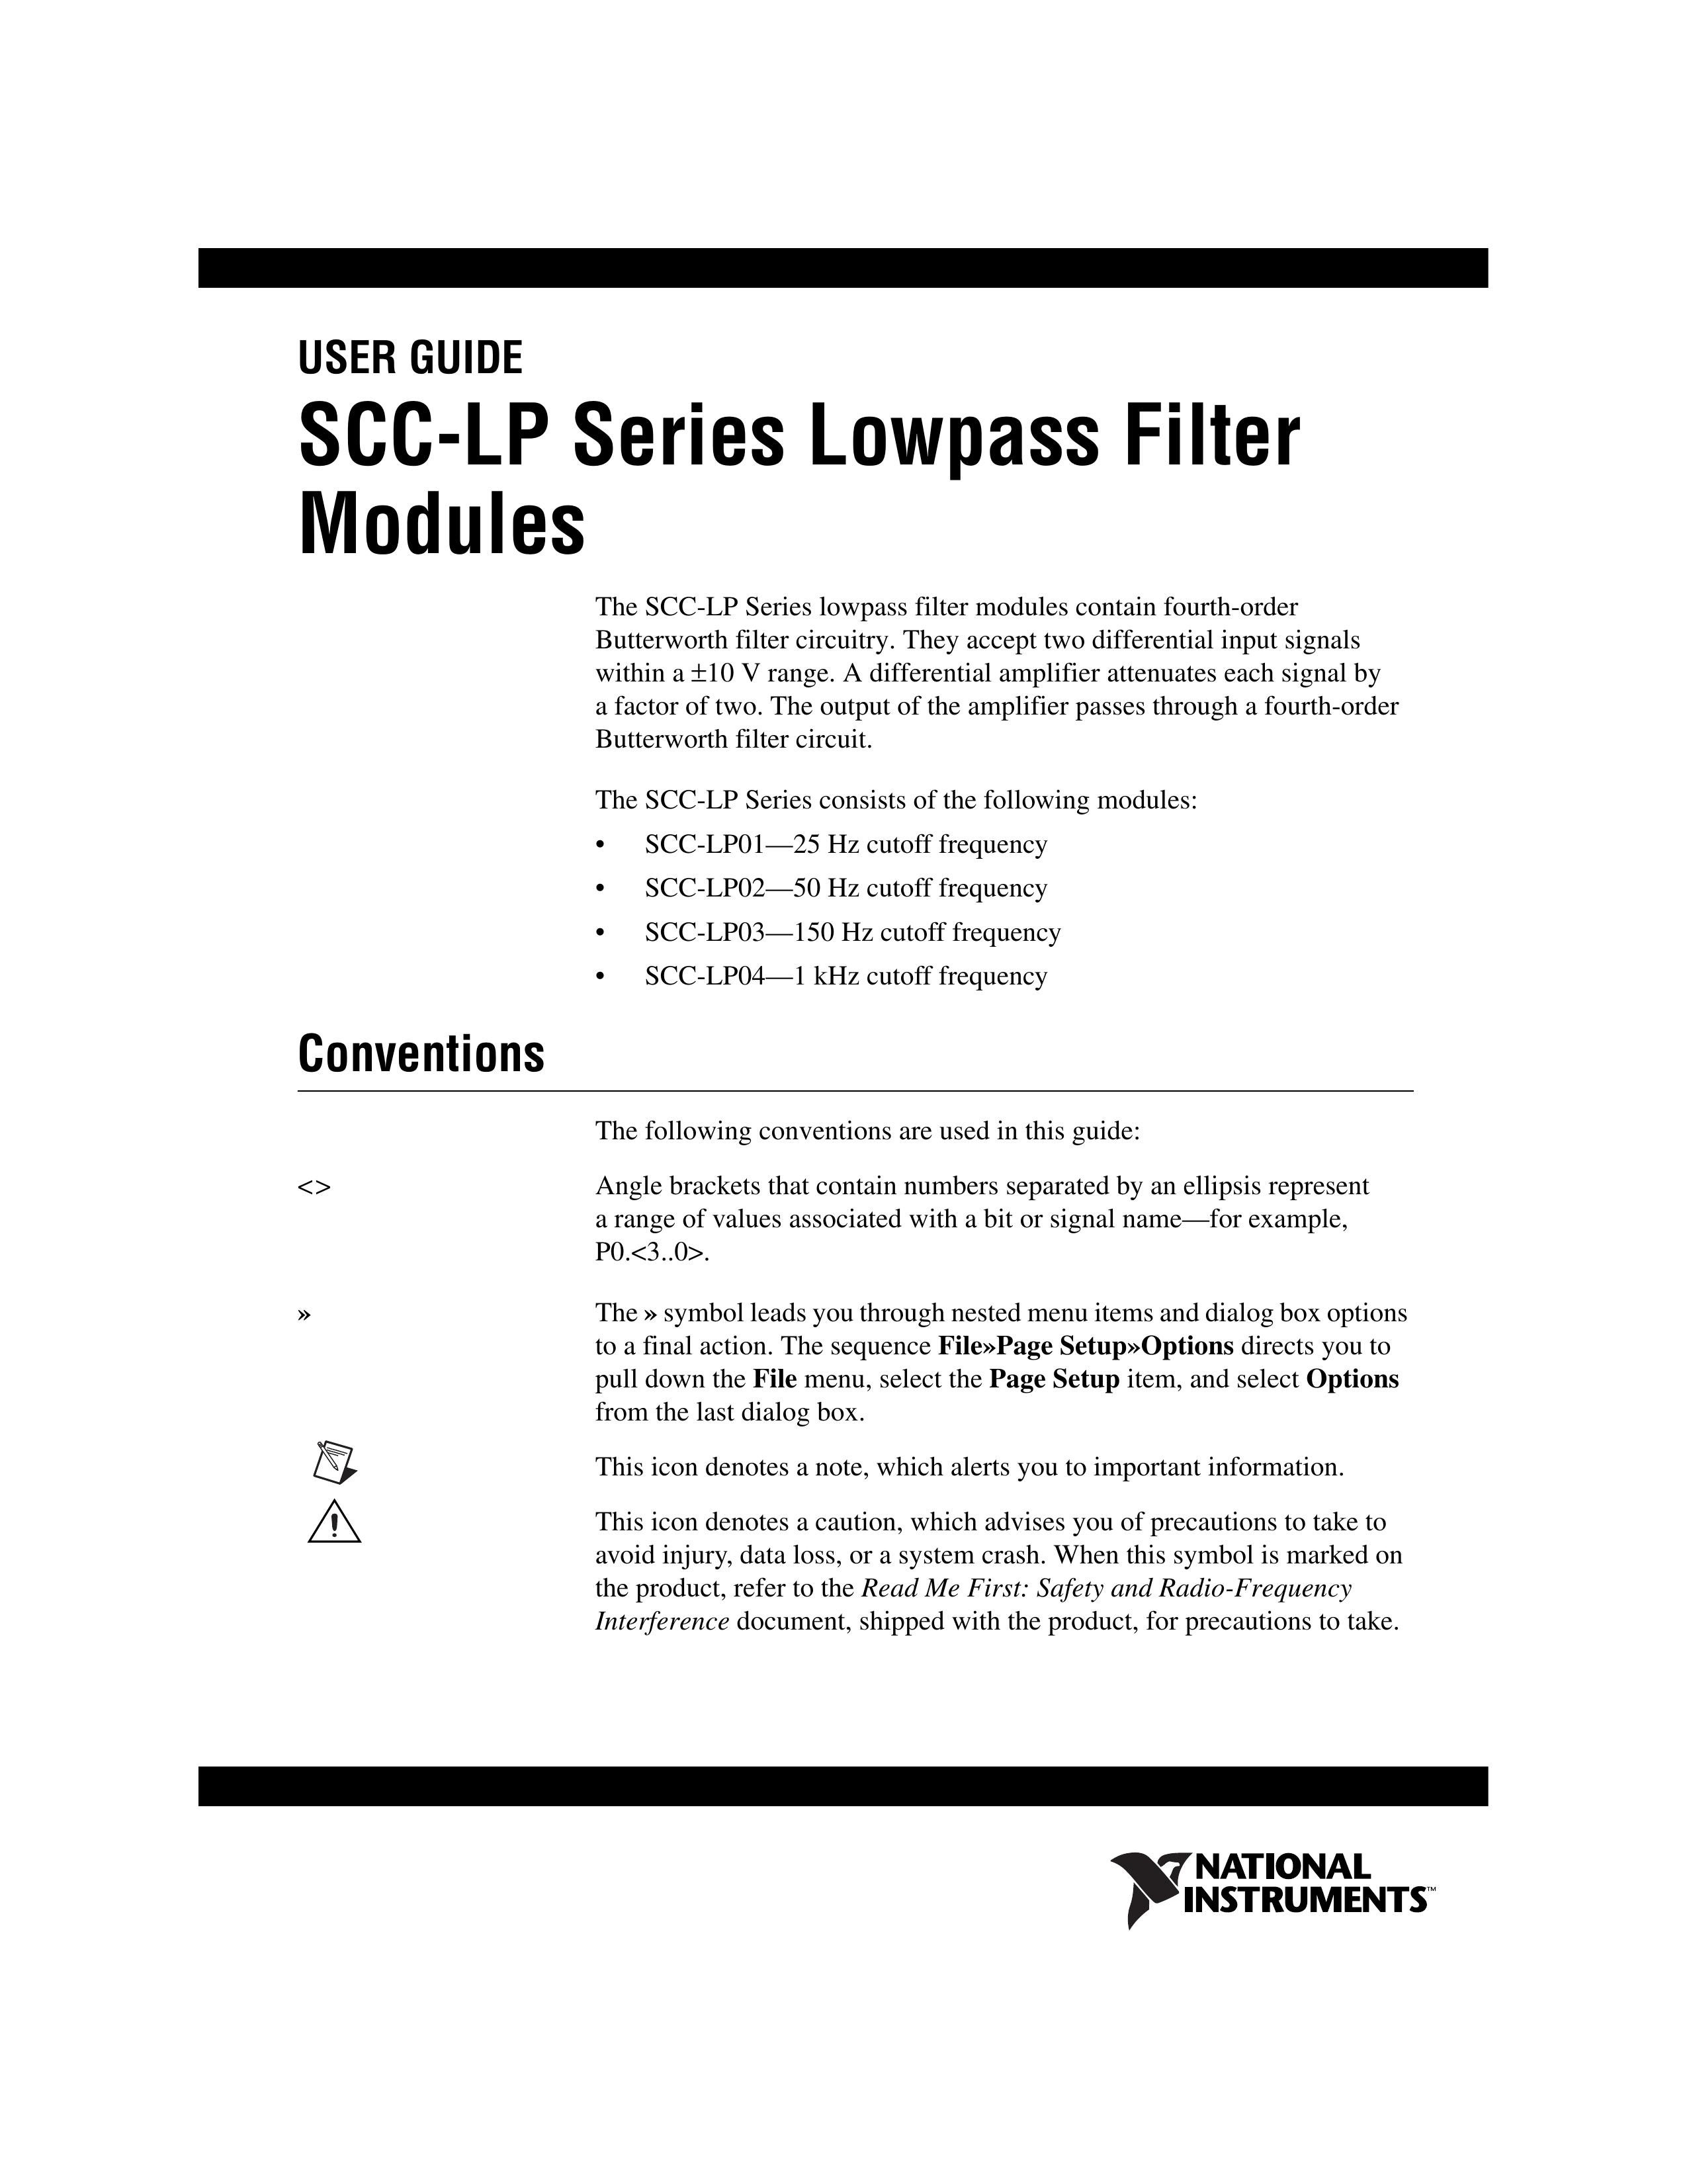 National Instruments SCC-LP01 Dryer Accessories User Manual